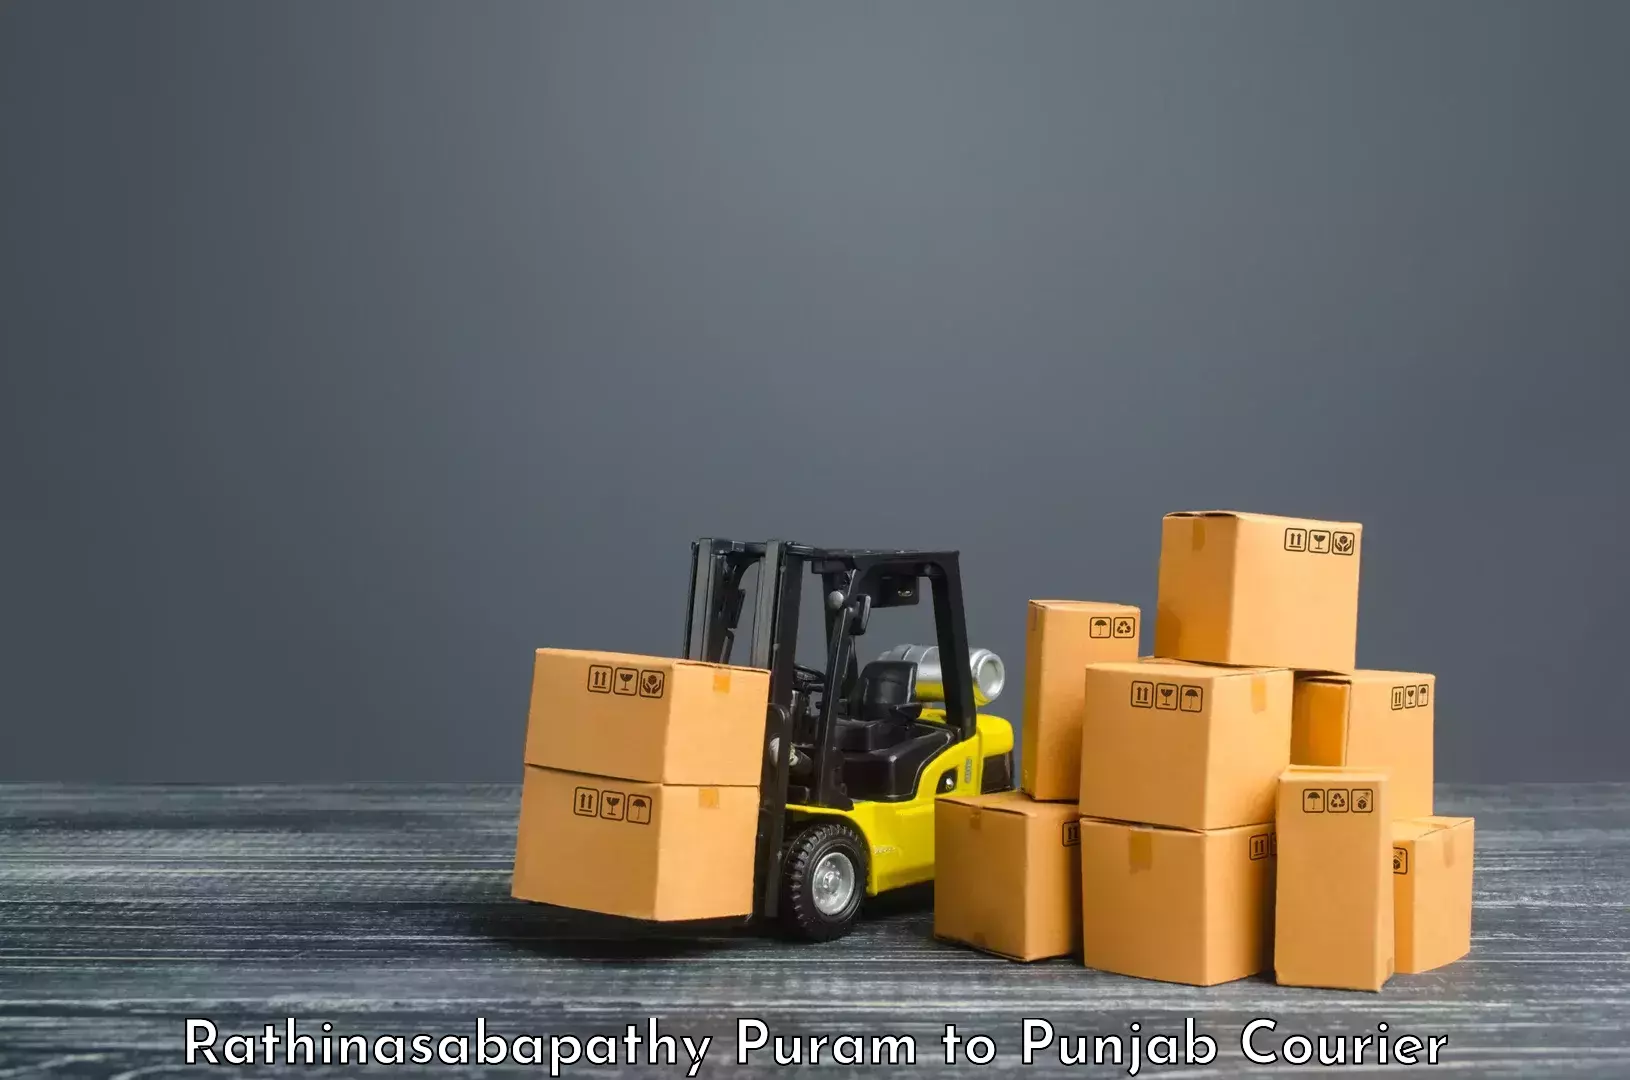 Innovative logistics solutions Rathinasabapathy Puram to Moga